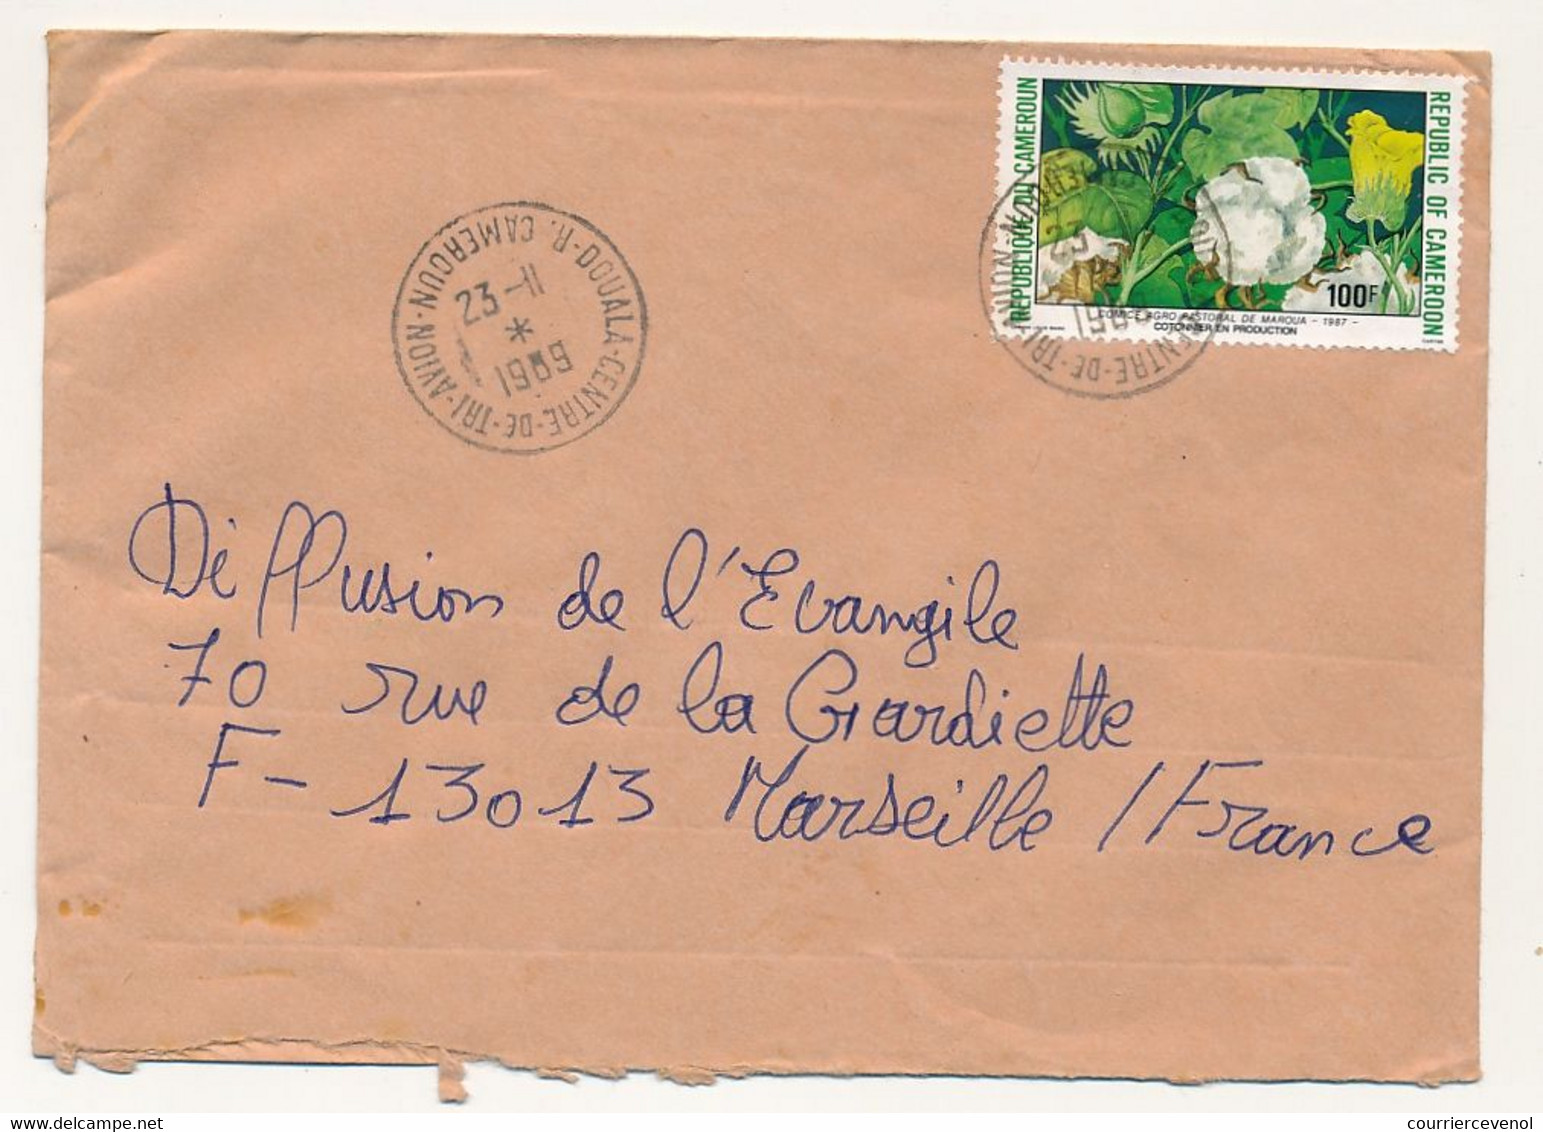 CAMEROUN => Enveloppe Douala Centre De Tri Avion Pour France, Affr. 100F Cotonnier - 23/11/1969 - Camerun (1960-...)